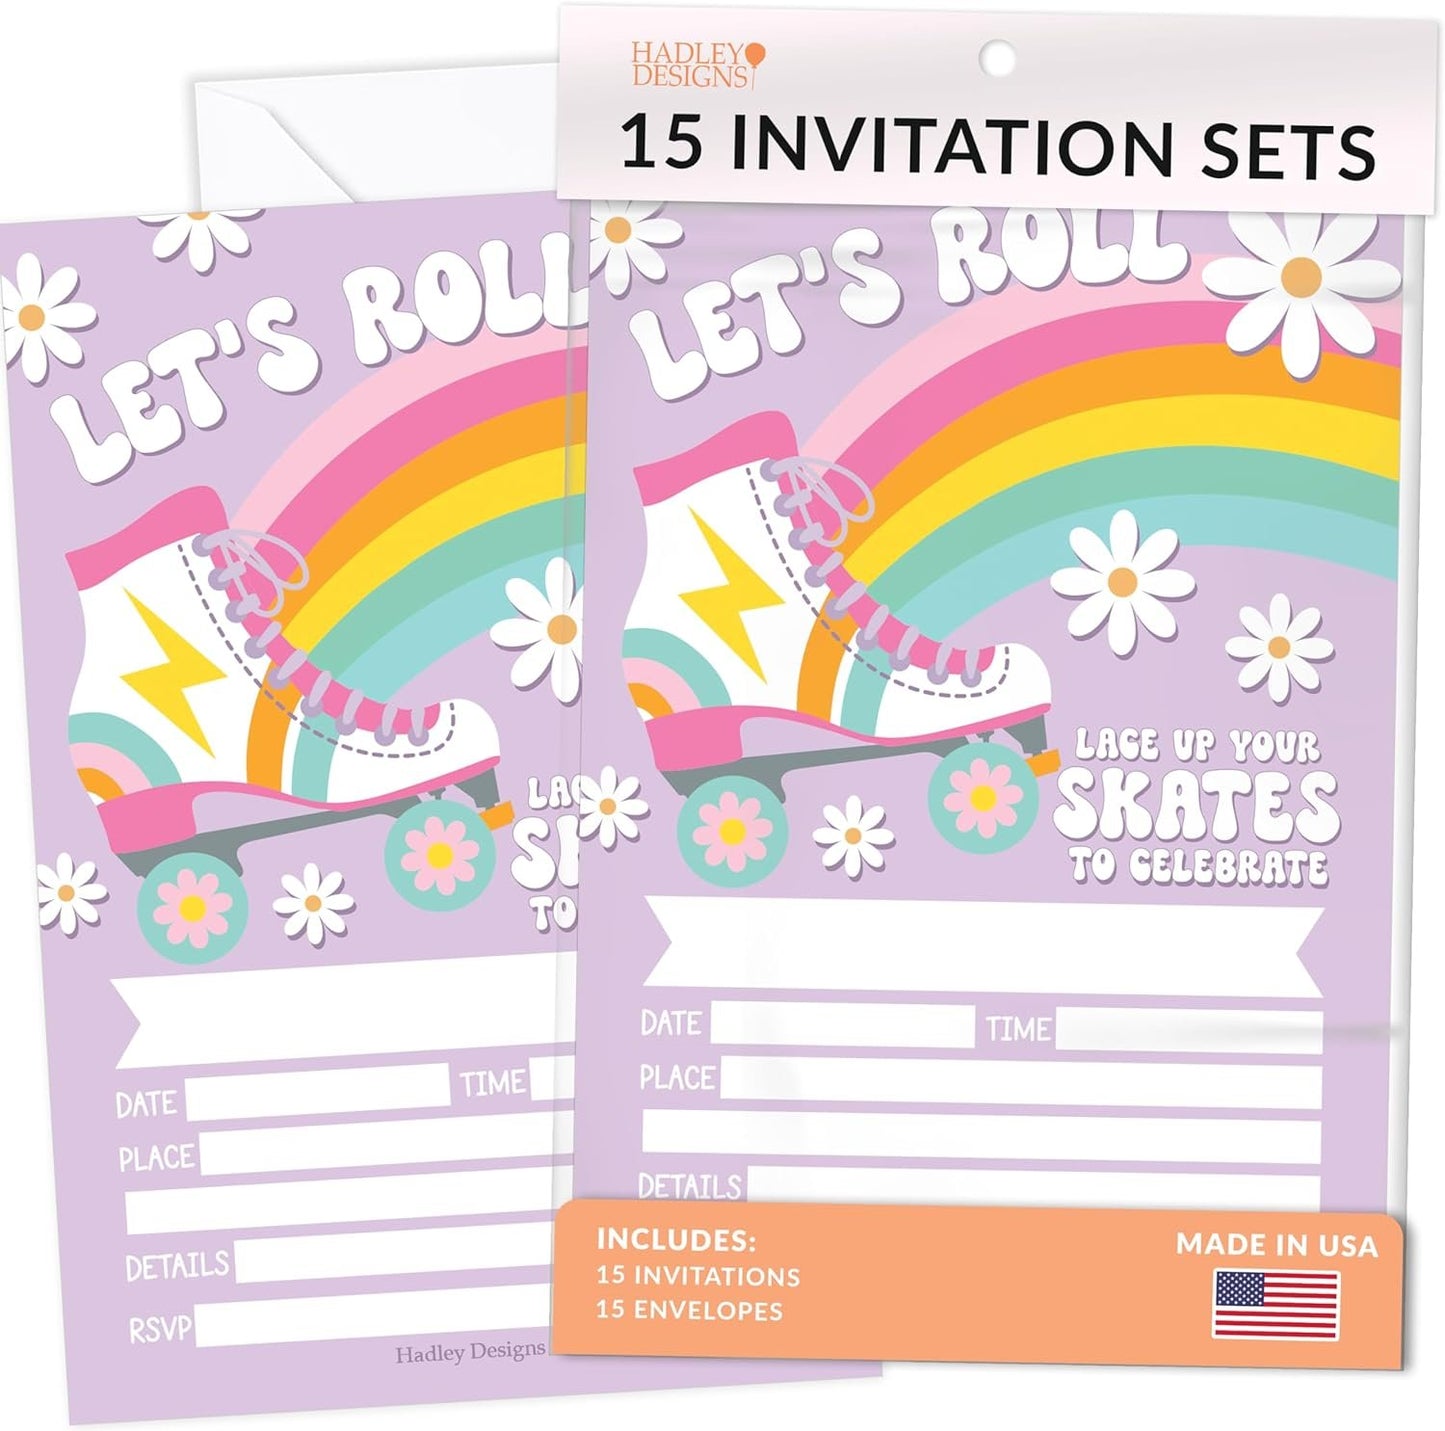 15 Roller Skate Birthday Invitations Girl - Groovy Birthday Party Invitations For Girls, Lets Roll Invitations For Birthday Party Invitation Girl, Invitation Cards, Kids Birthday Invitations Girl